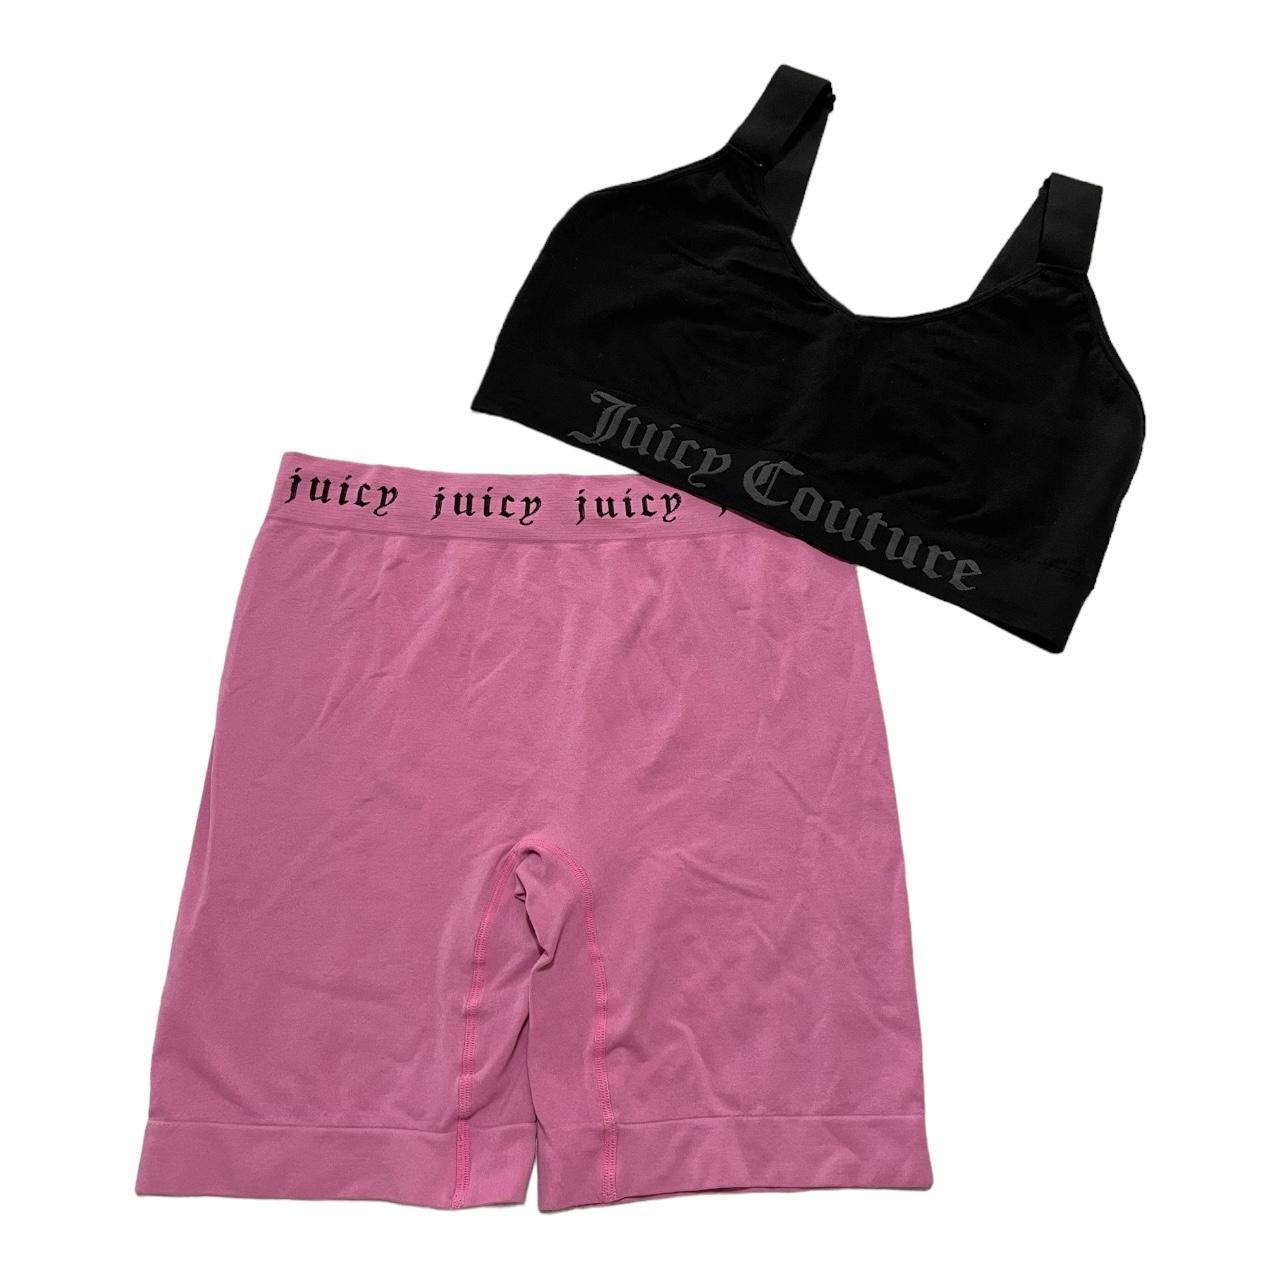 item - juicy couture underwear brand - juicy - Depop